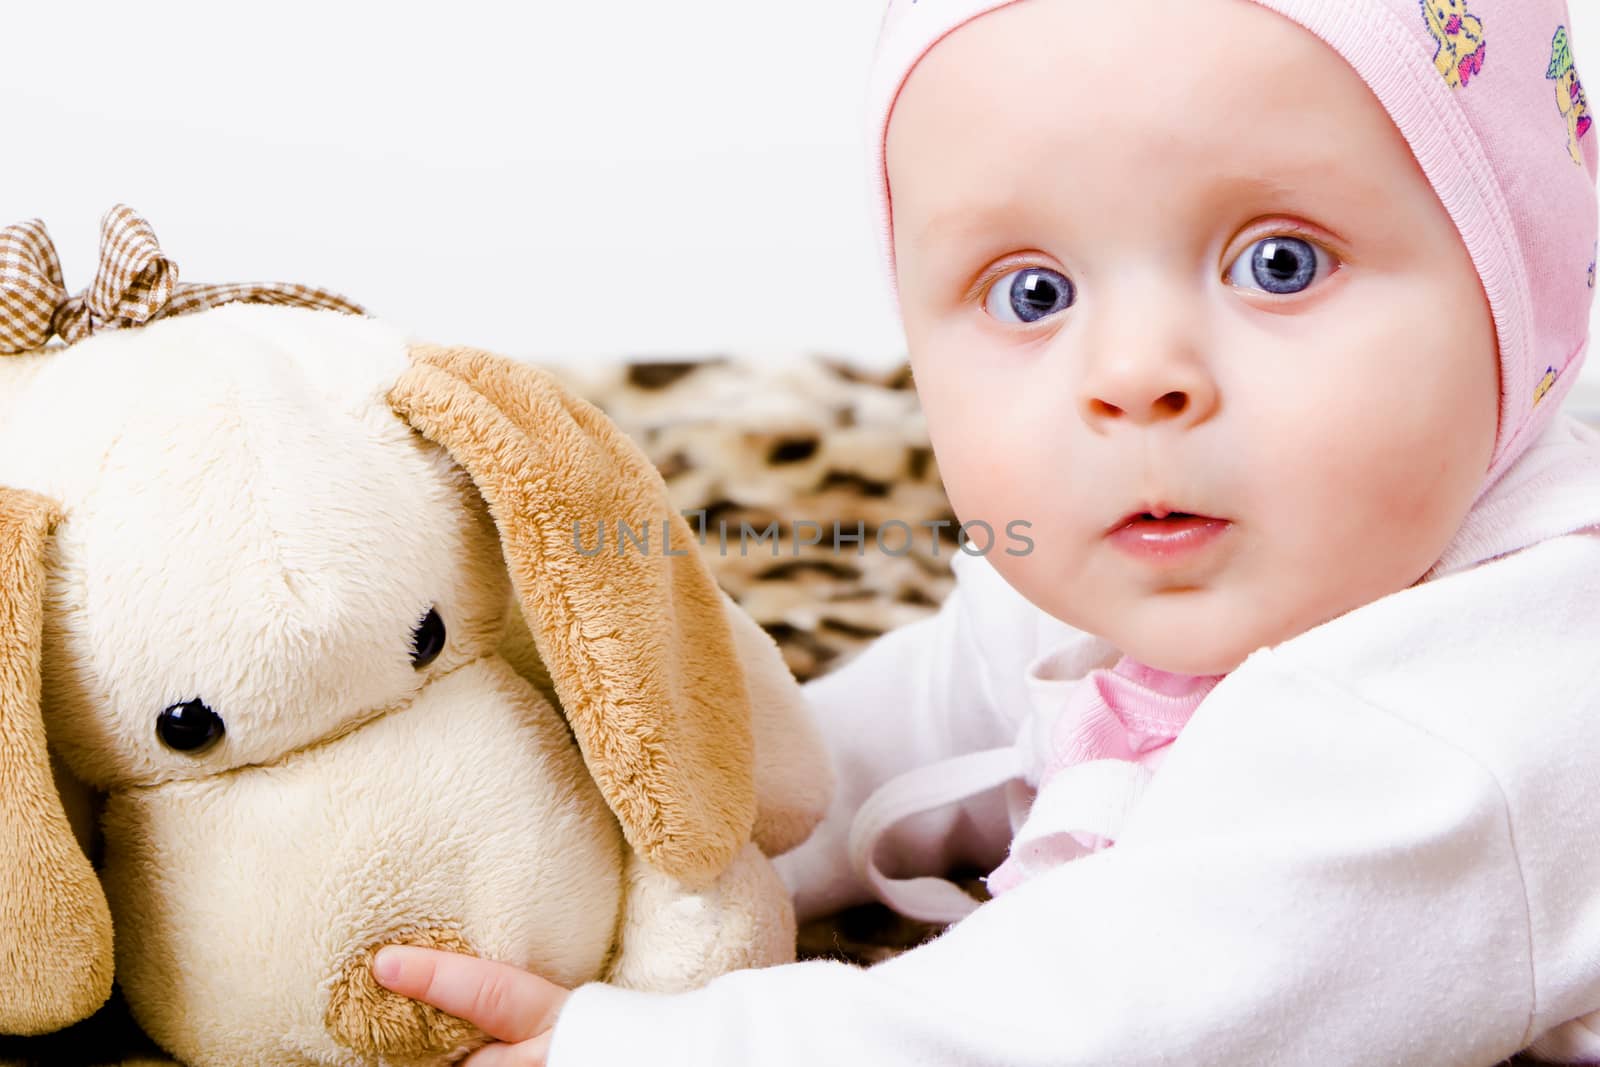 blue-eyed baby with a soft toy. studio photo by pzRomashka